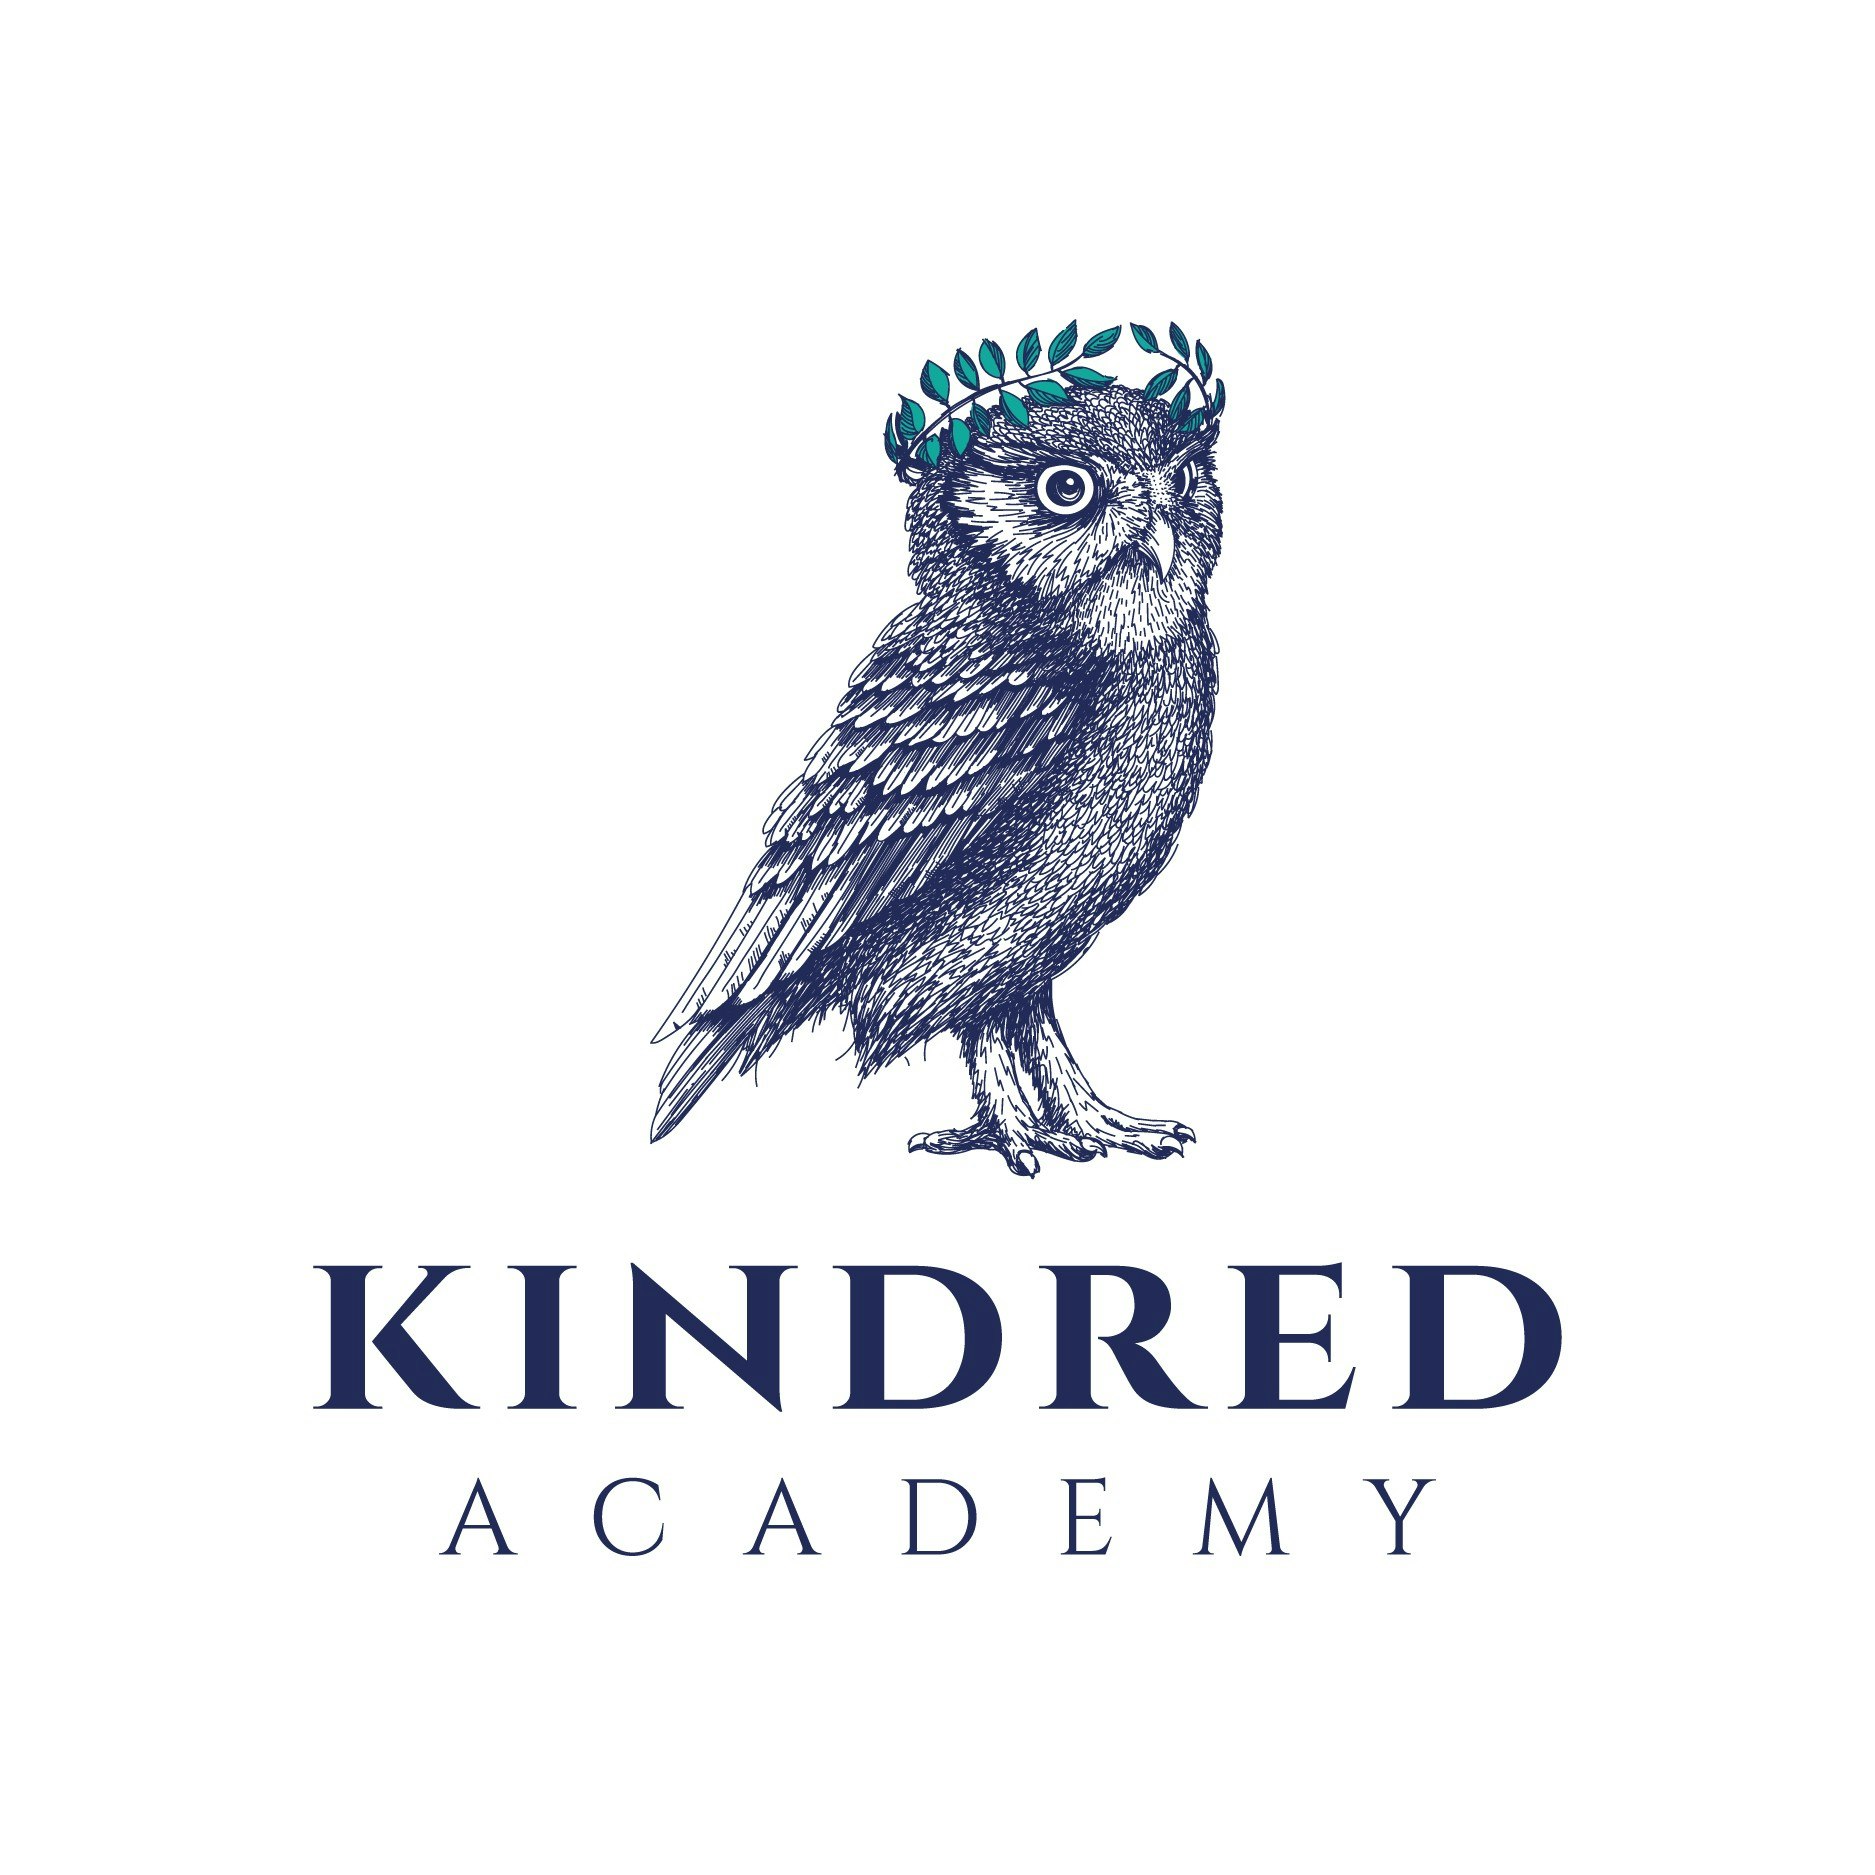 Kindred academy ugle logo